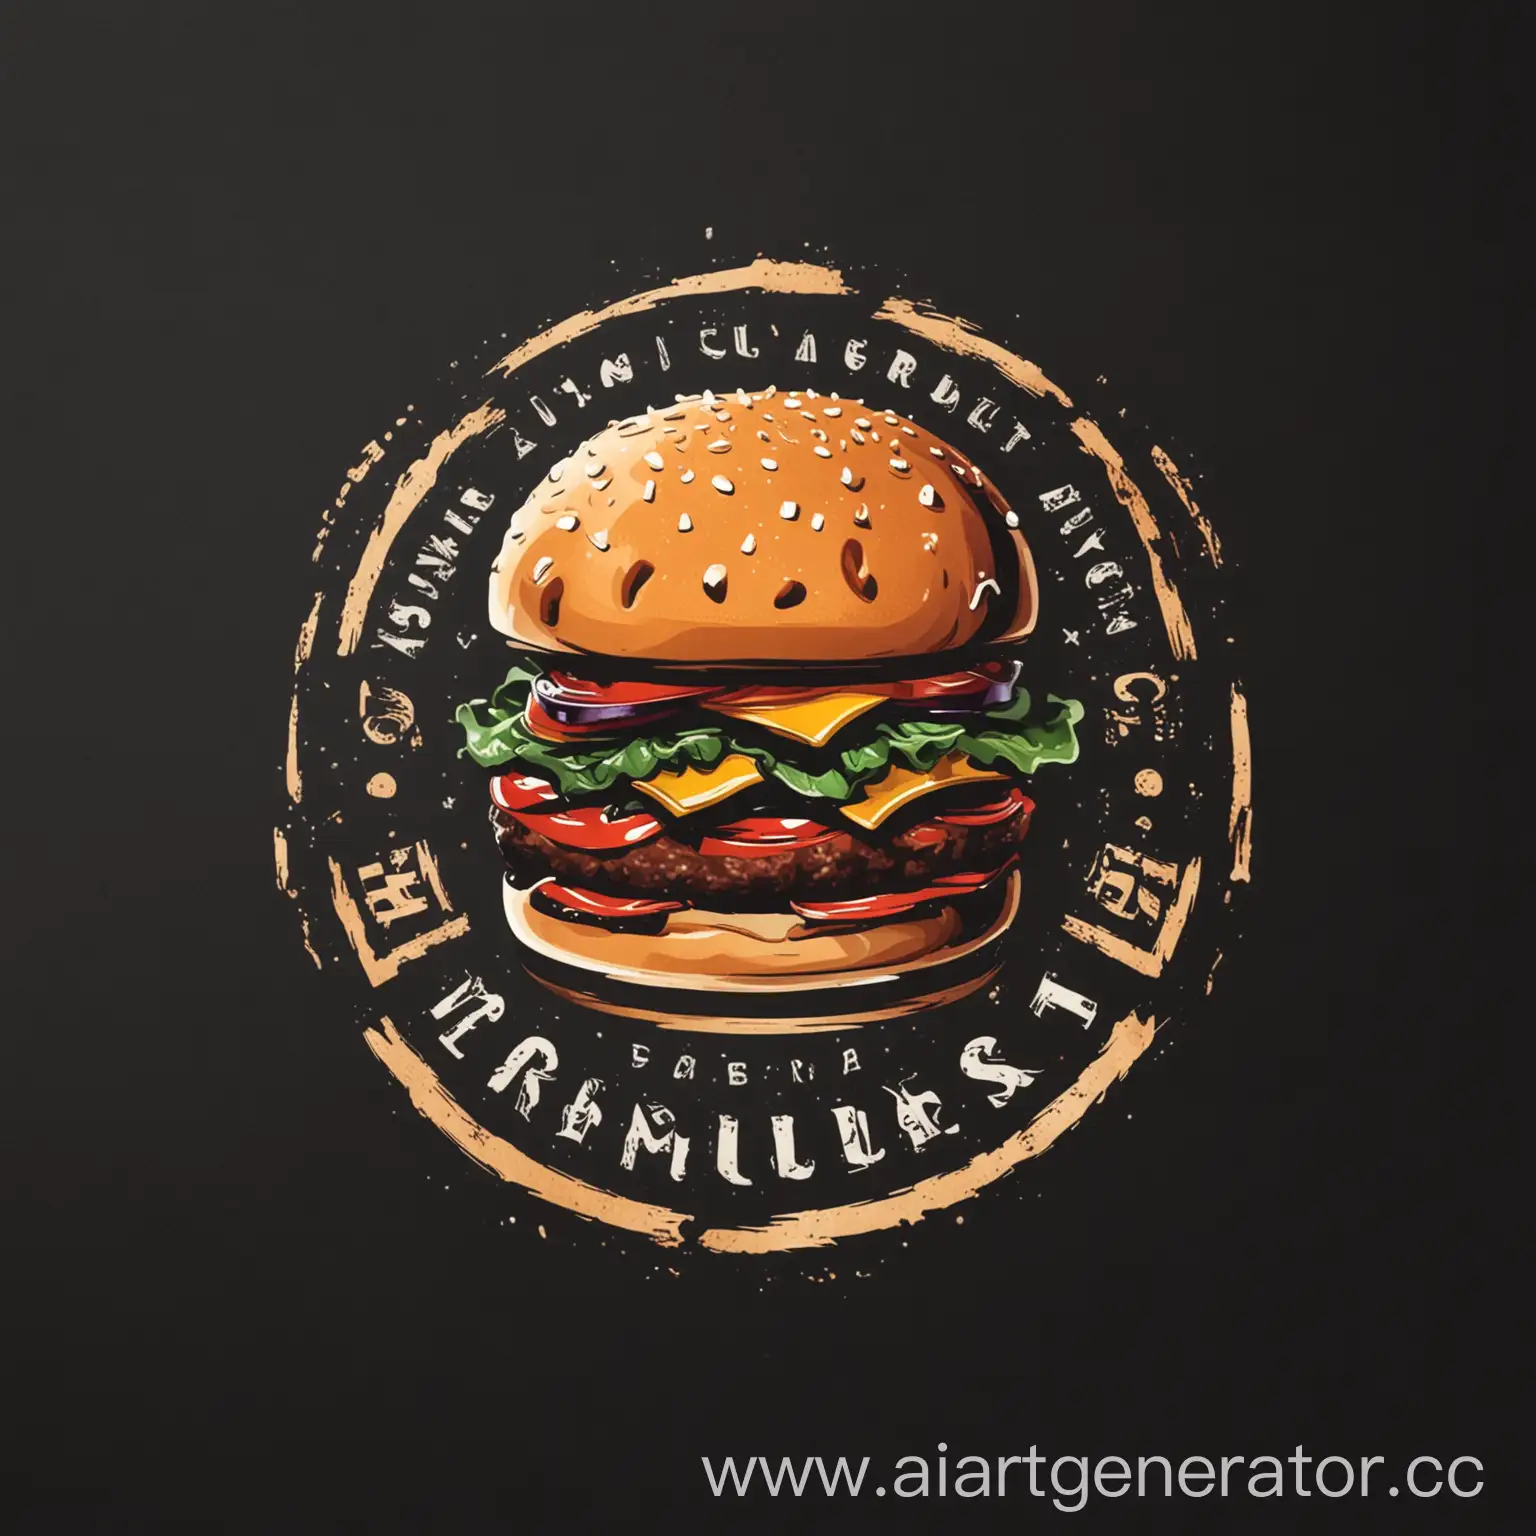 Vibrant-Burger-Restaurant-Logo-Design-Juicy-Burgers-and-Fries-in-Retro-Style